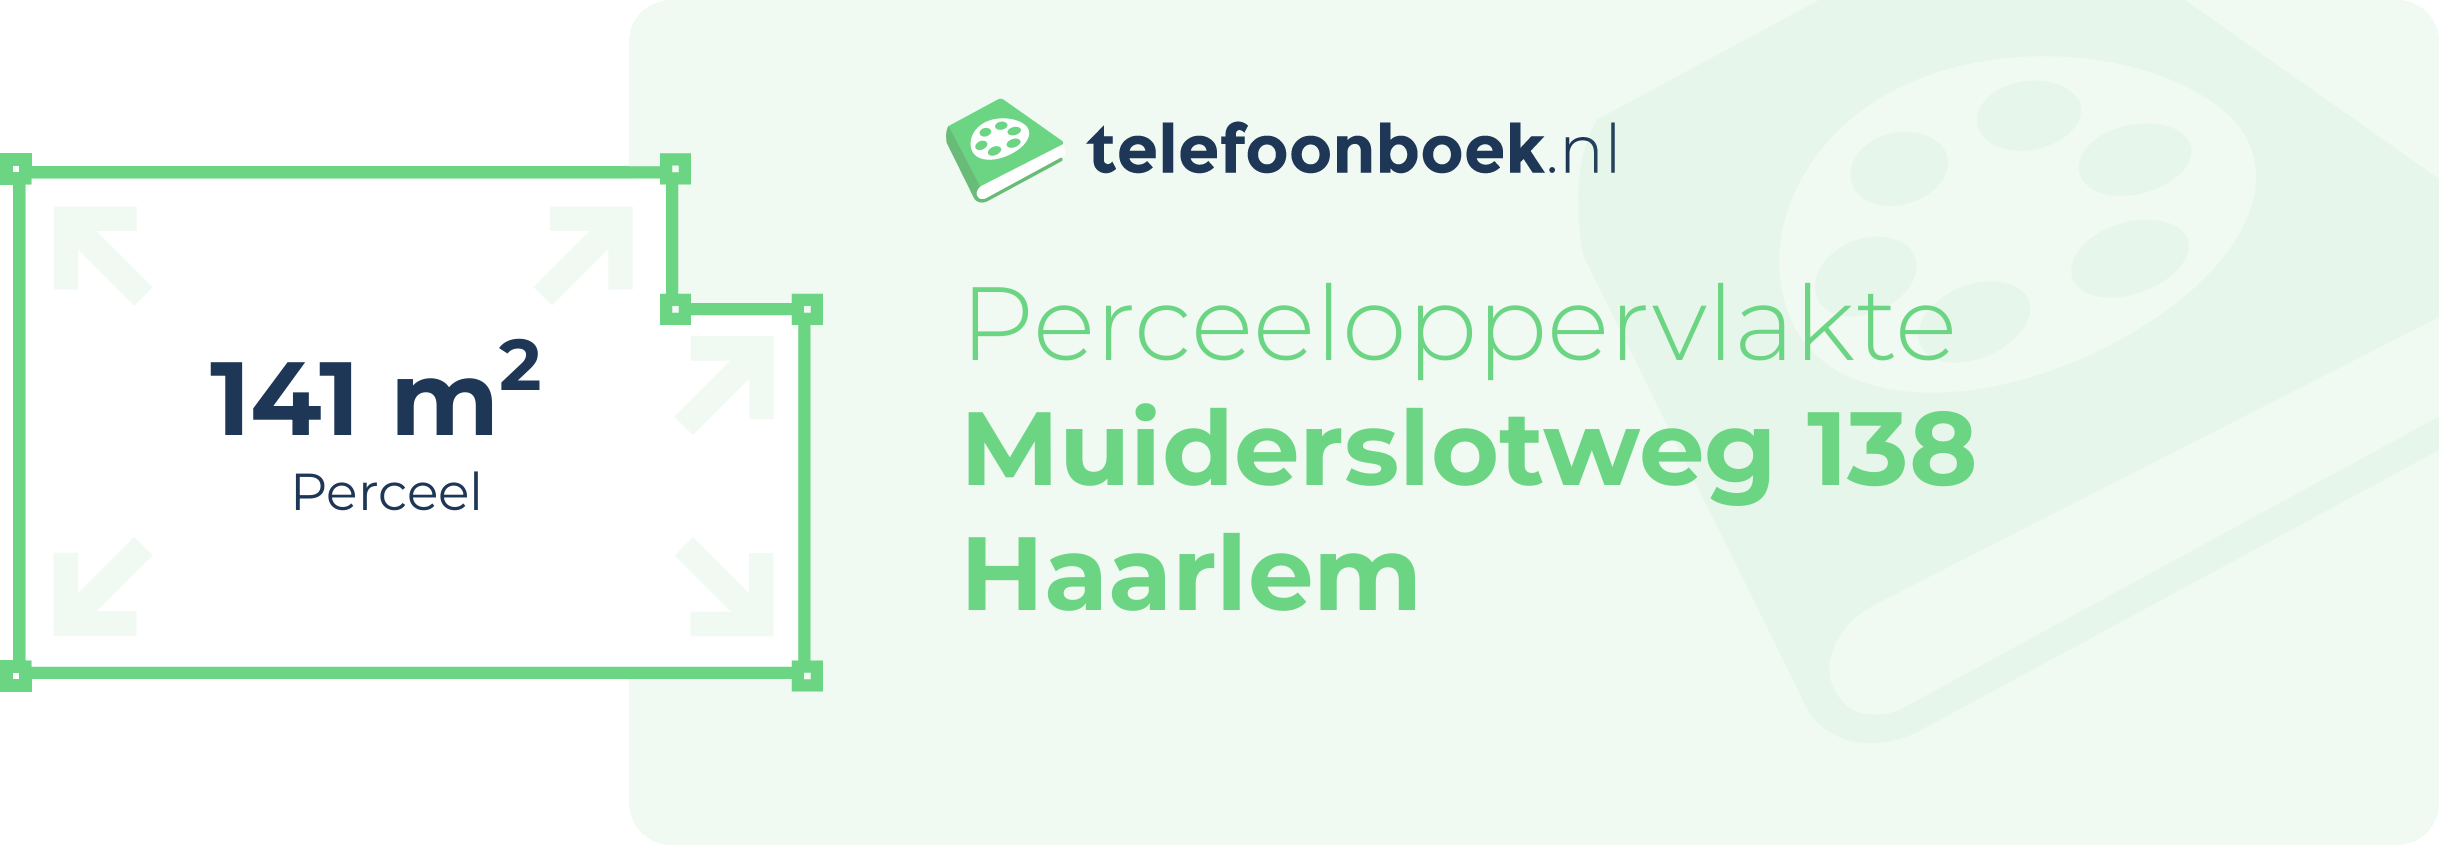 Perceeloppervlakte Muiderslotweg 138 Haarlem